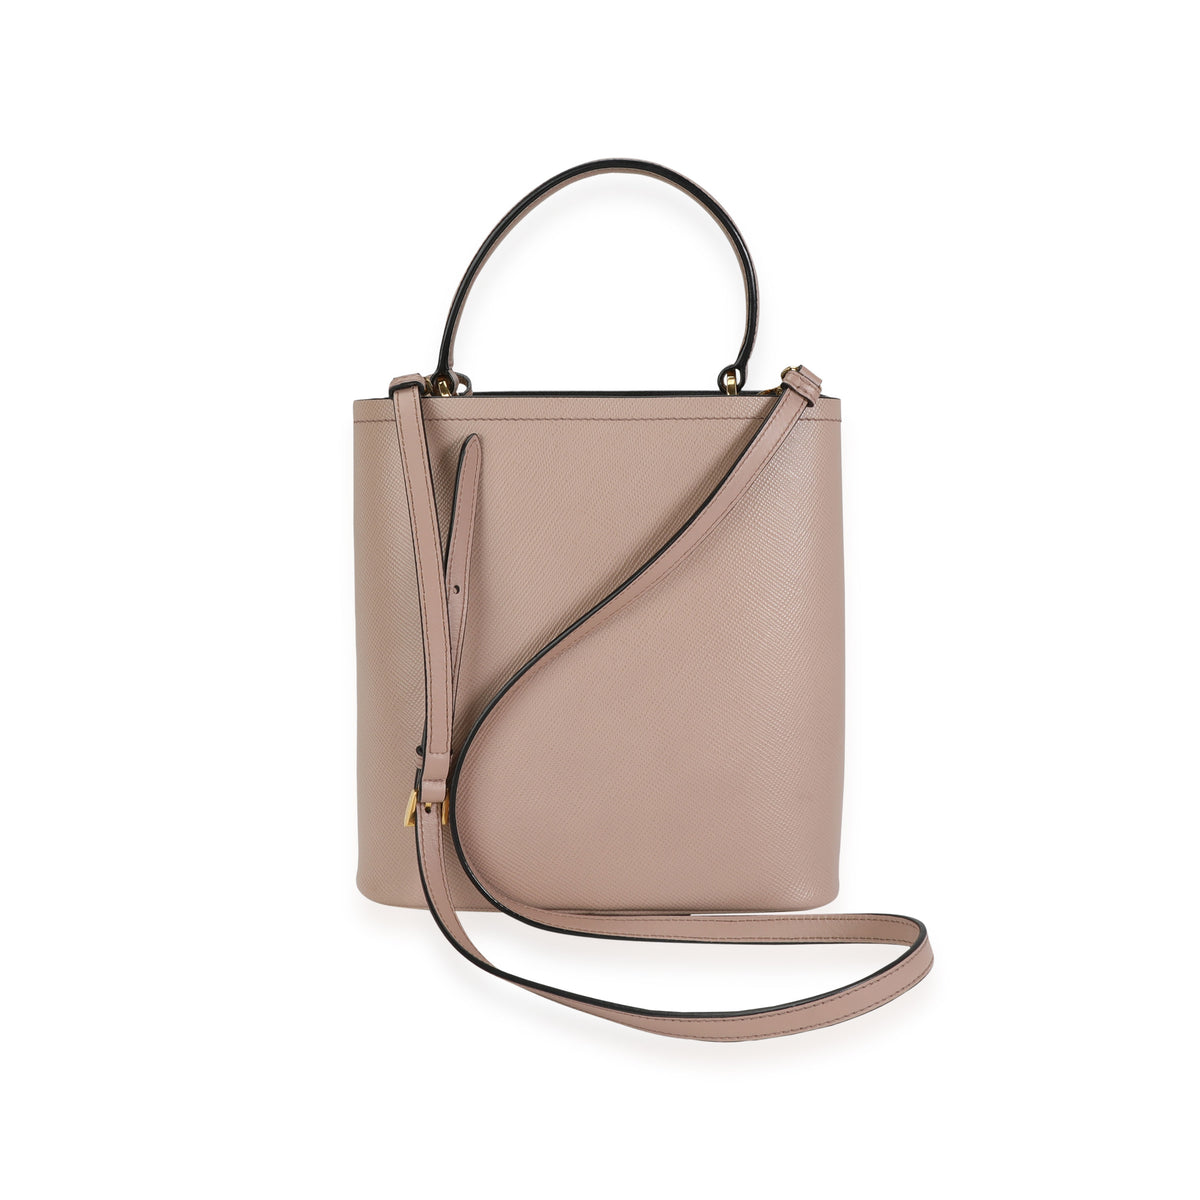 Prada Small Leather Panier Bag - Pink